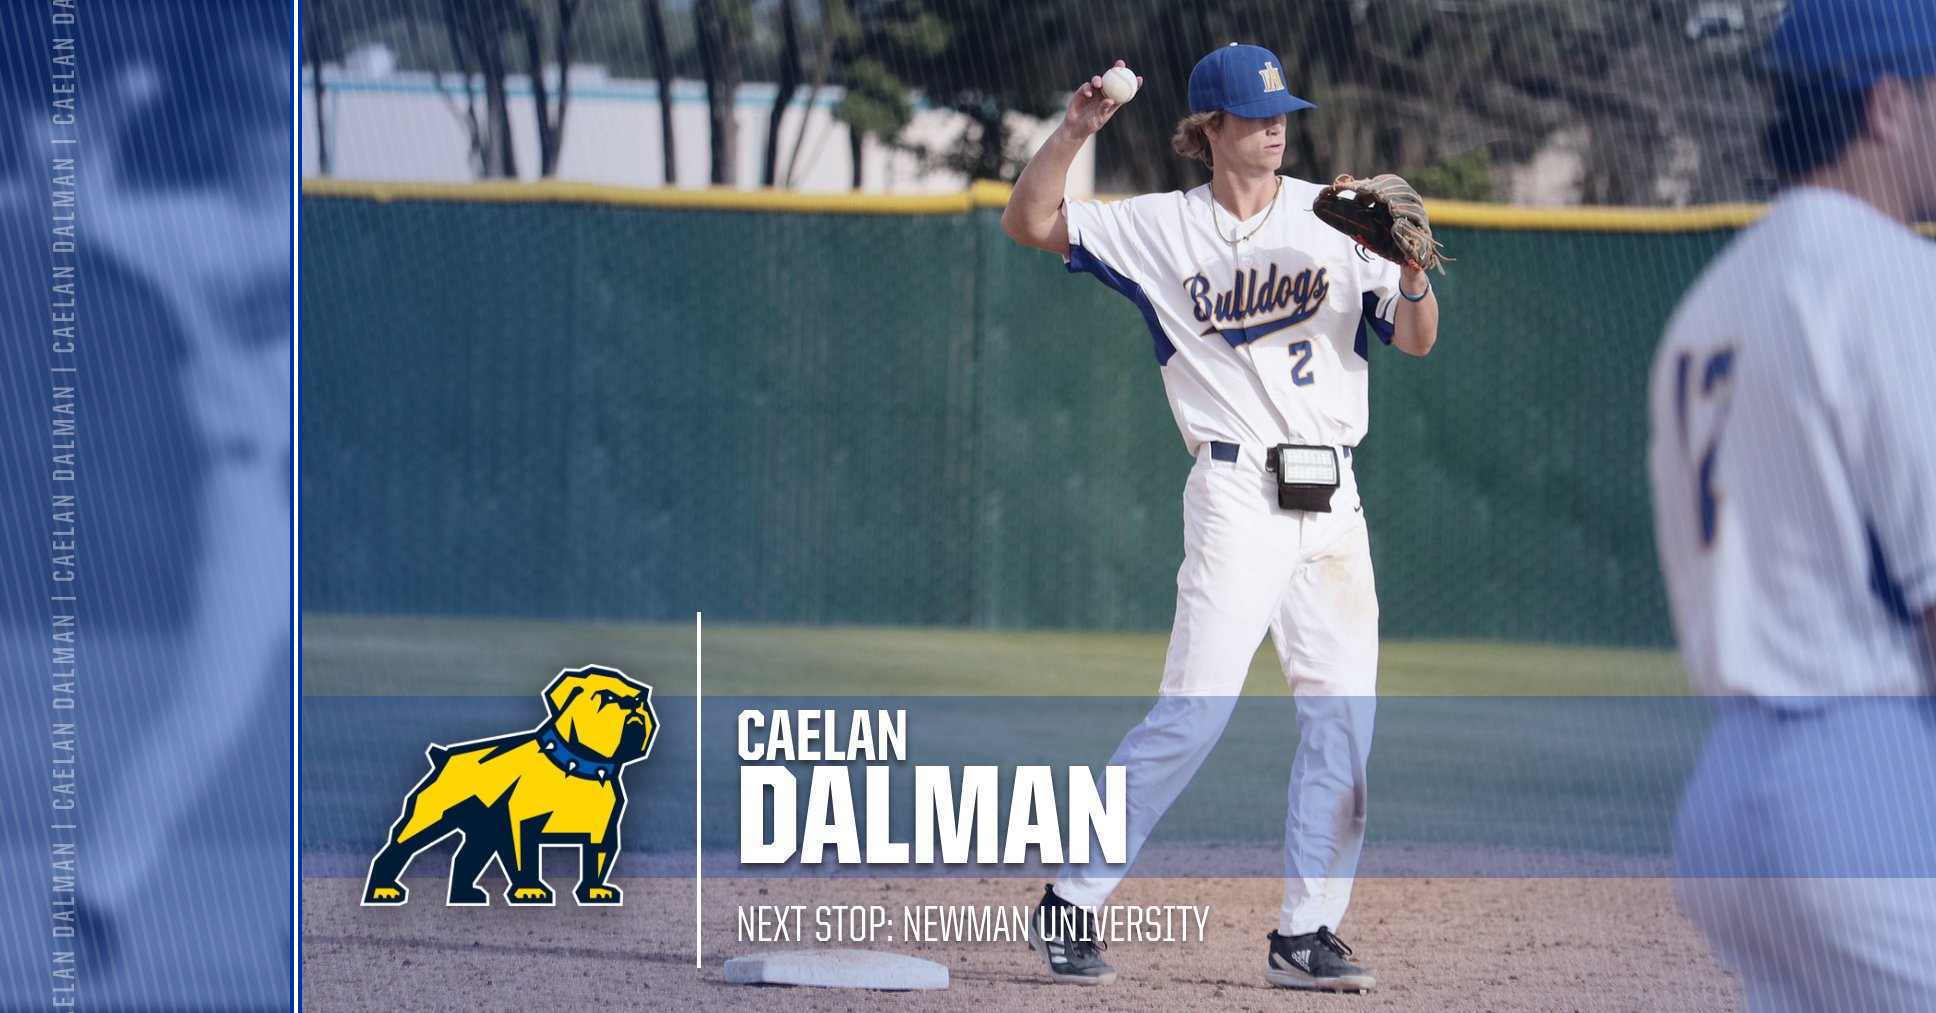 Baseball's Caelan Dalman to Play for Newman University